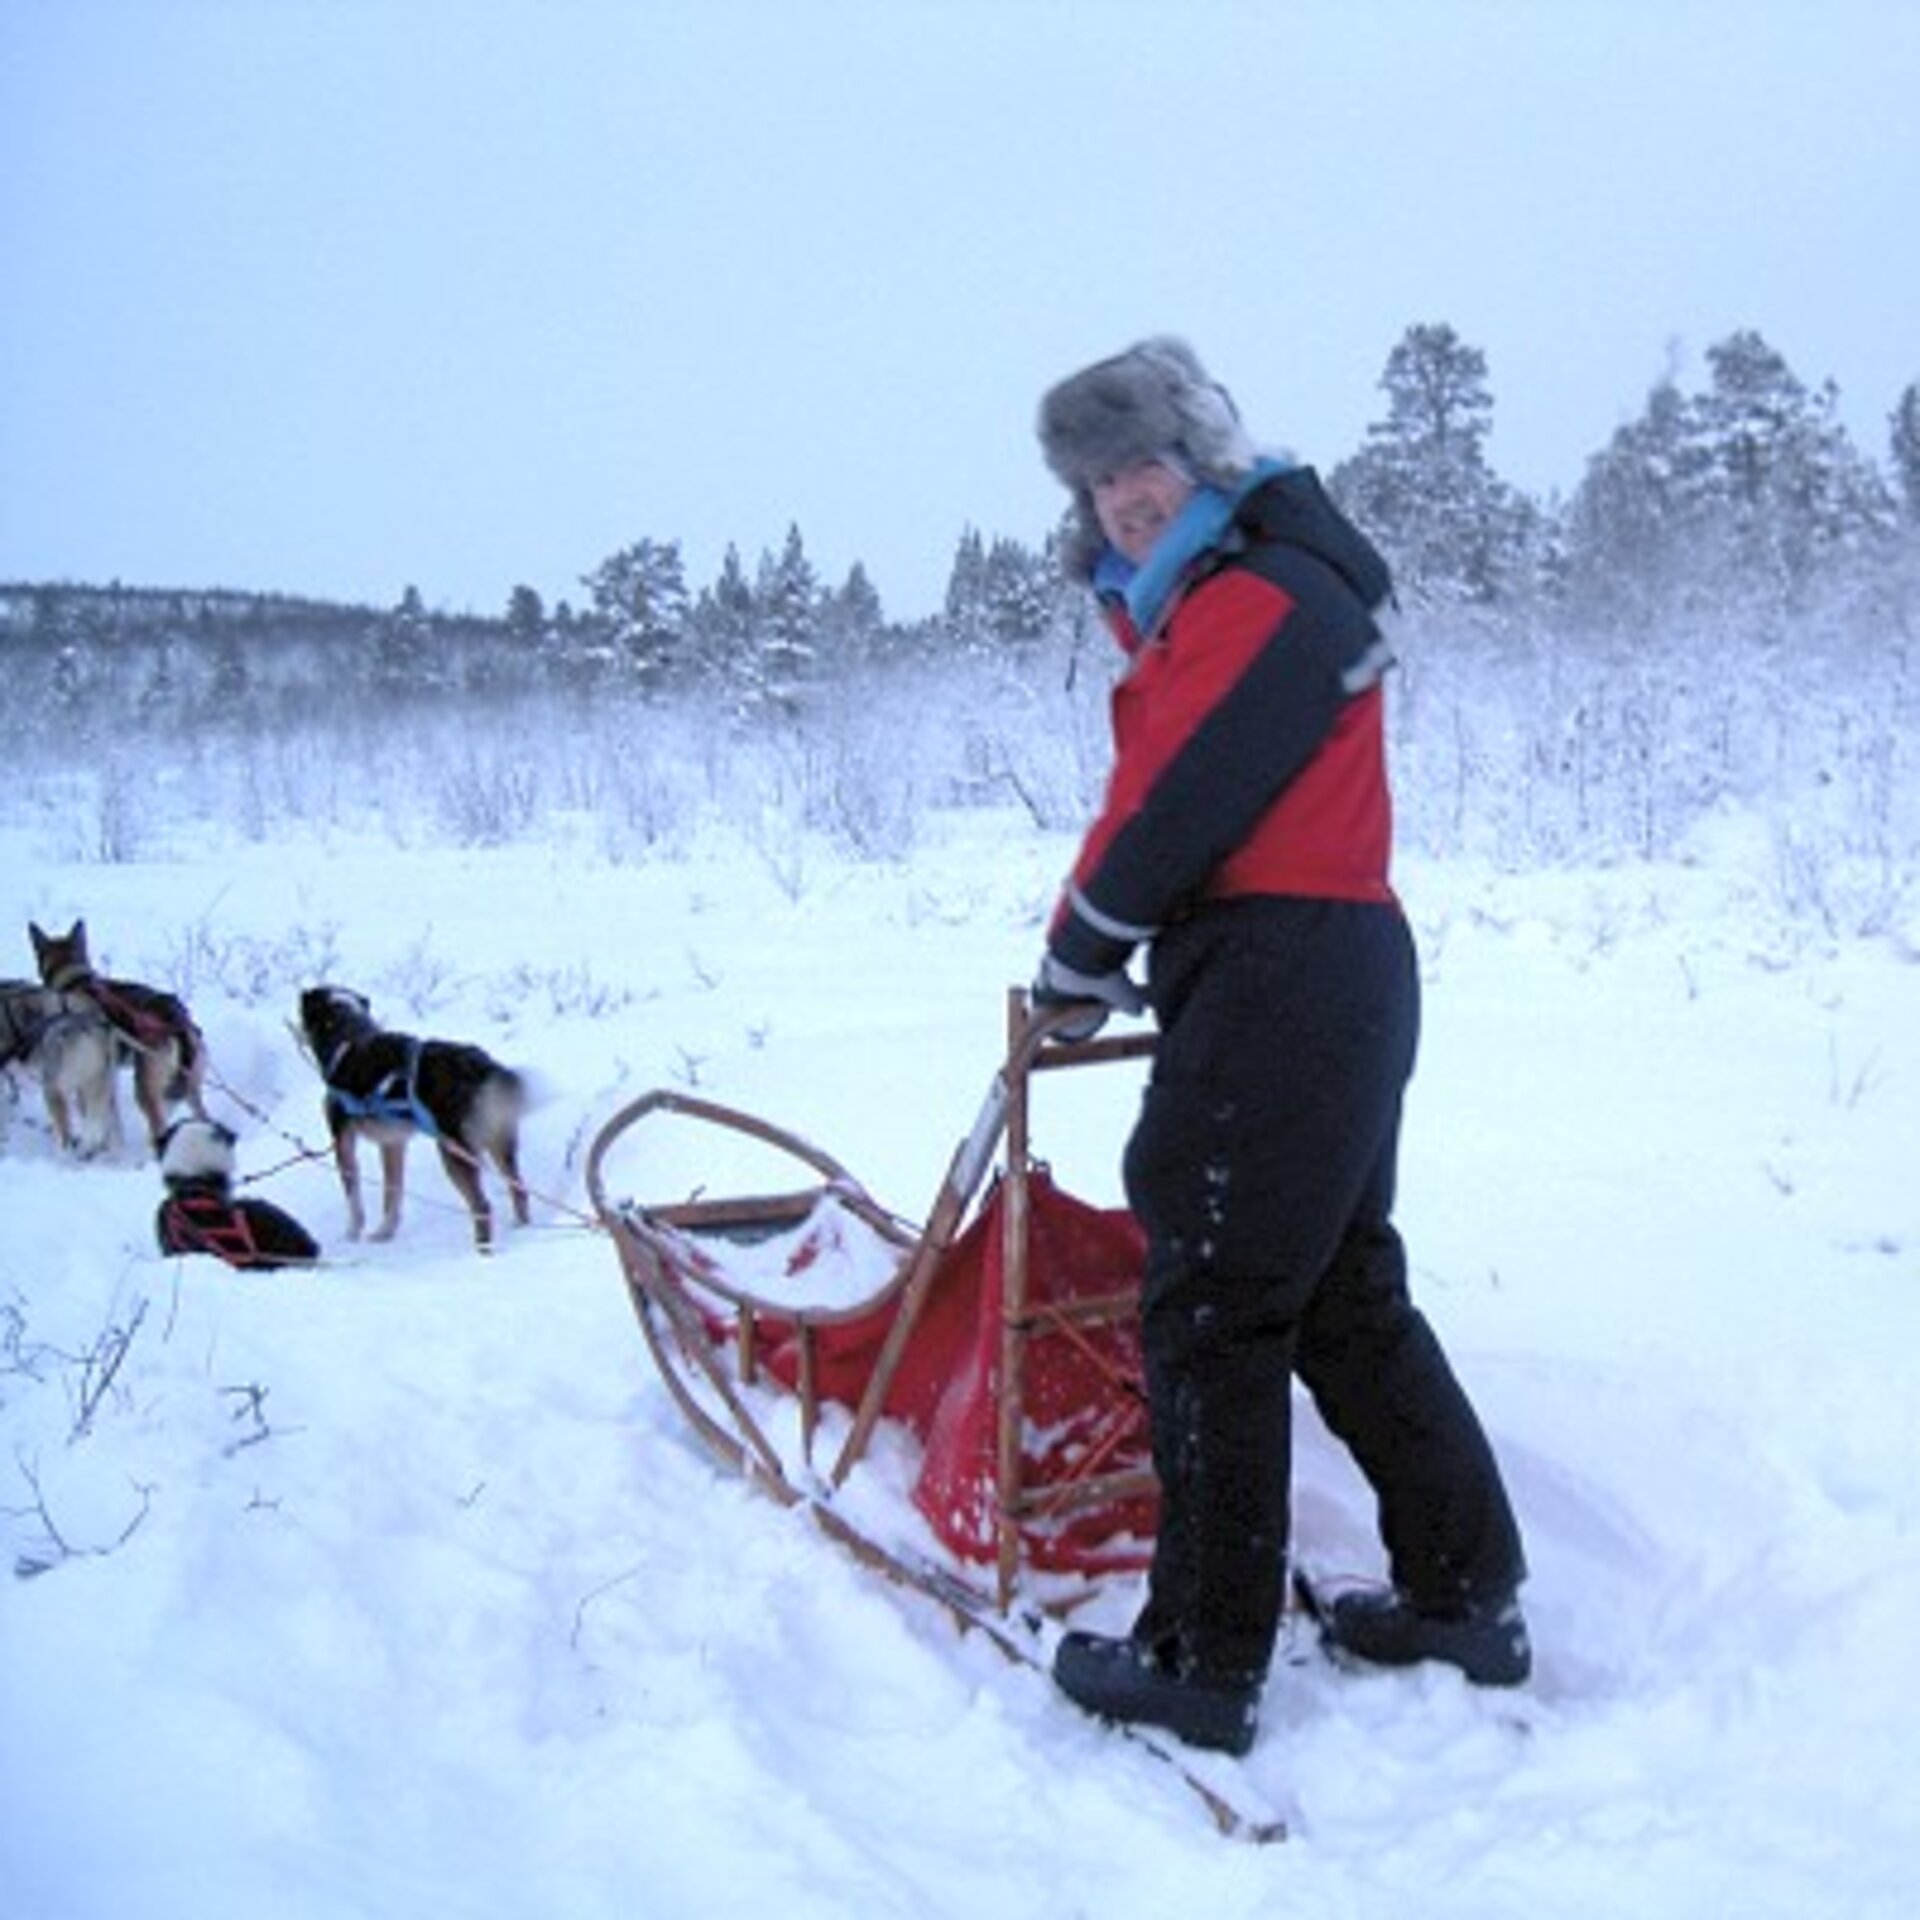 Rides on dog sleighs